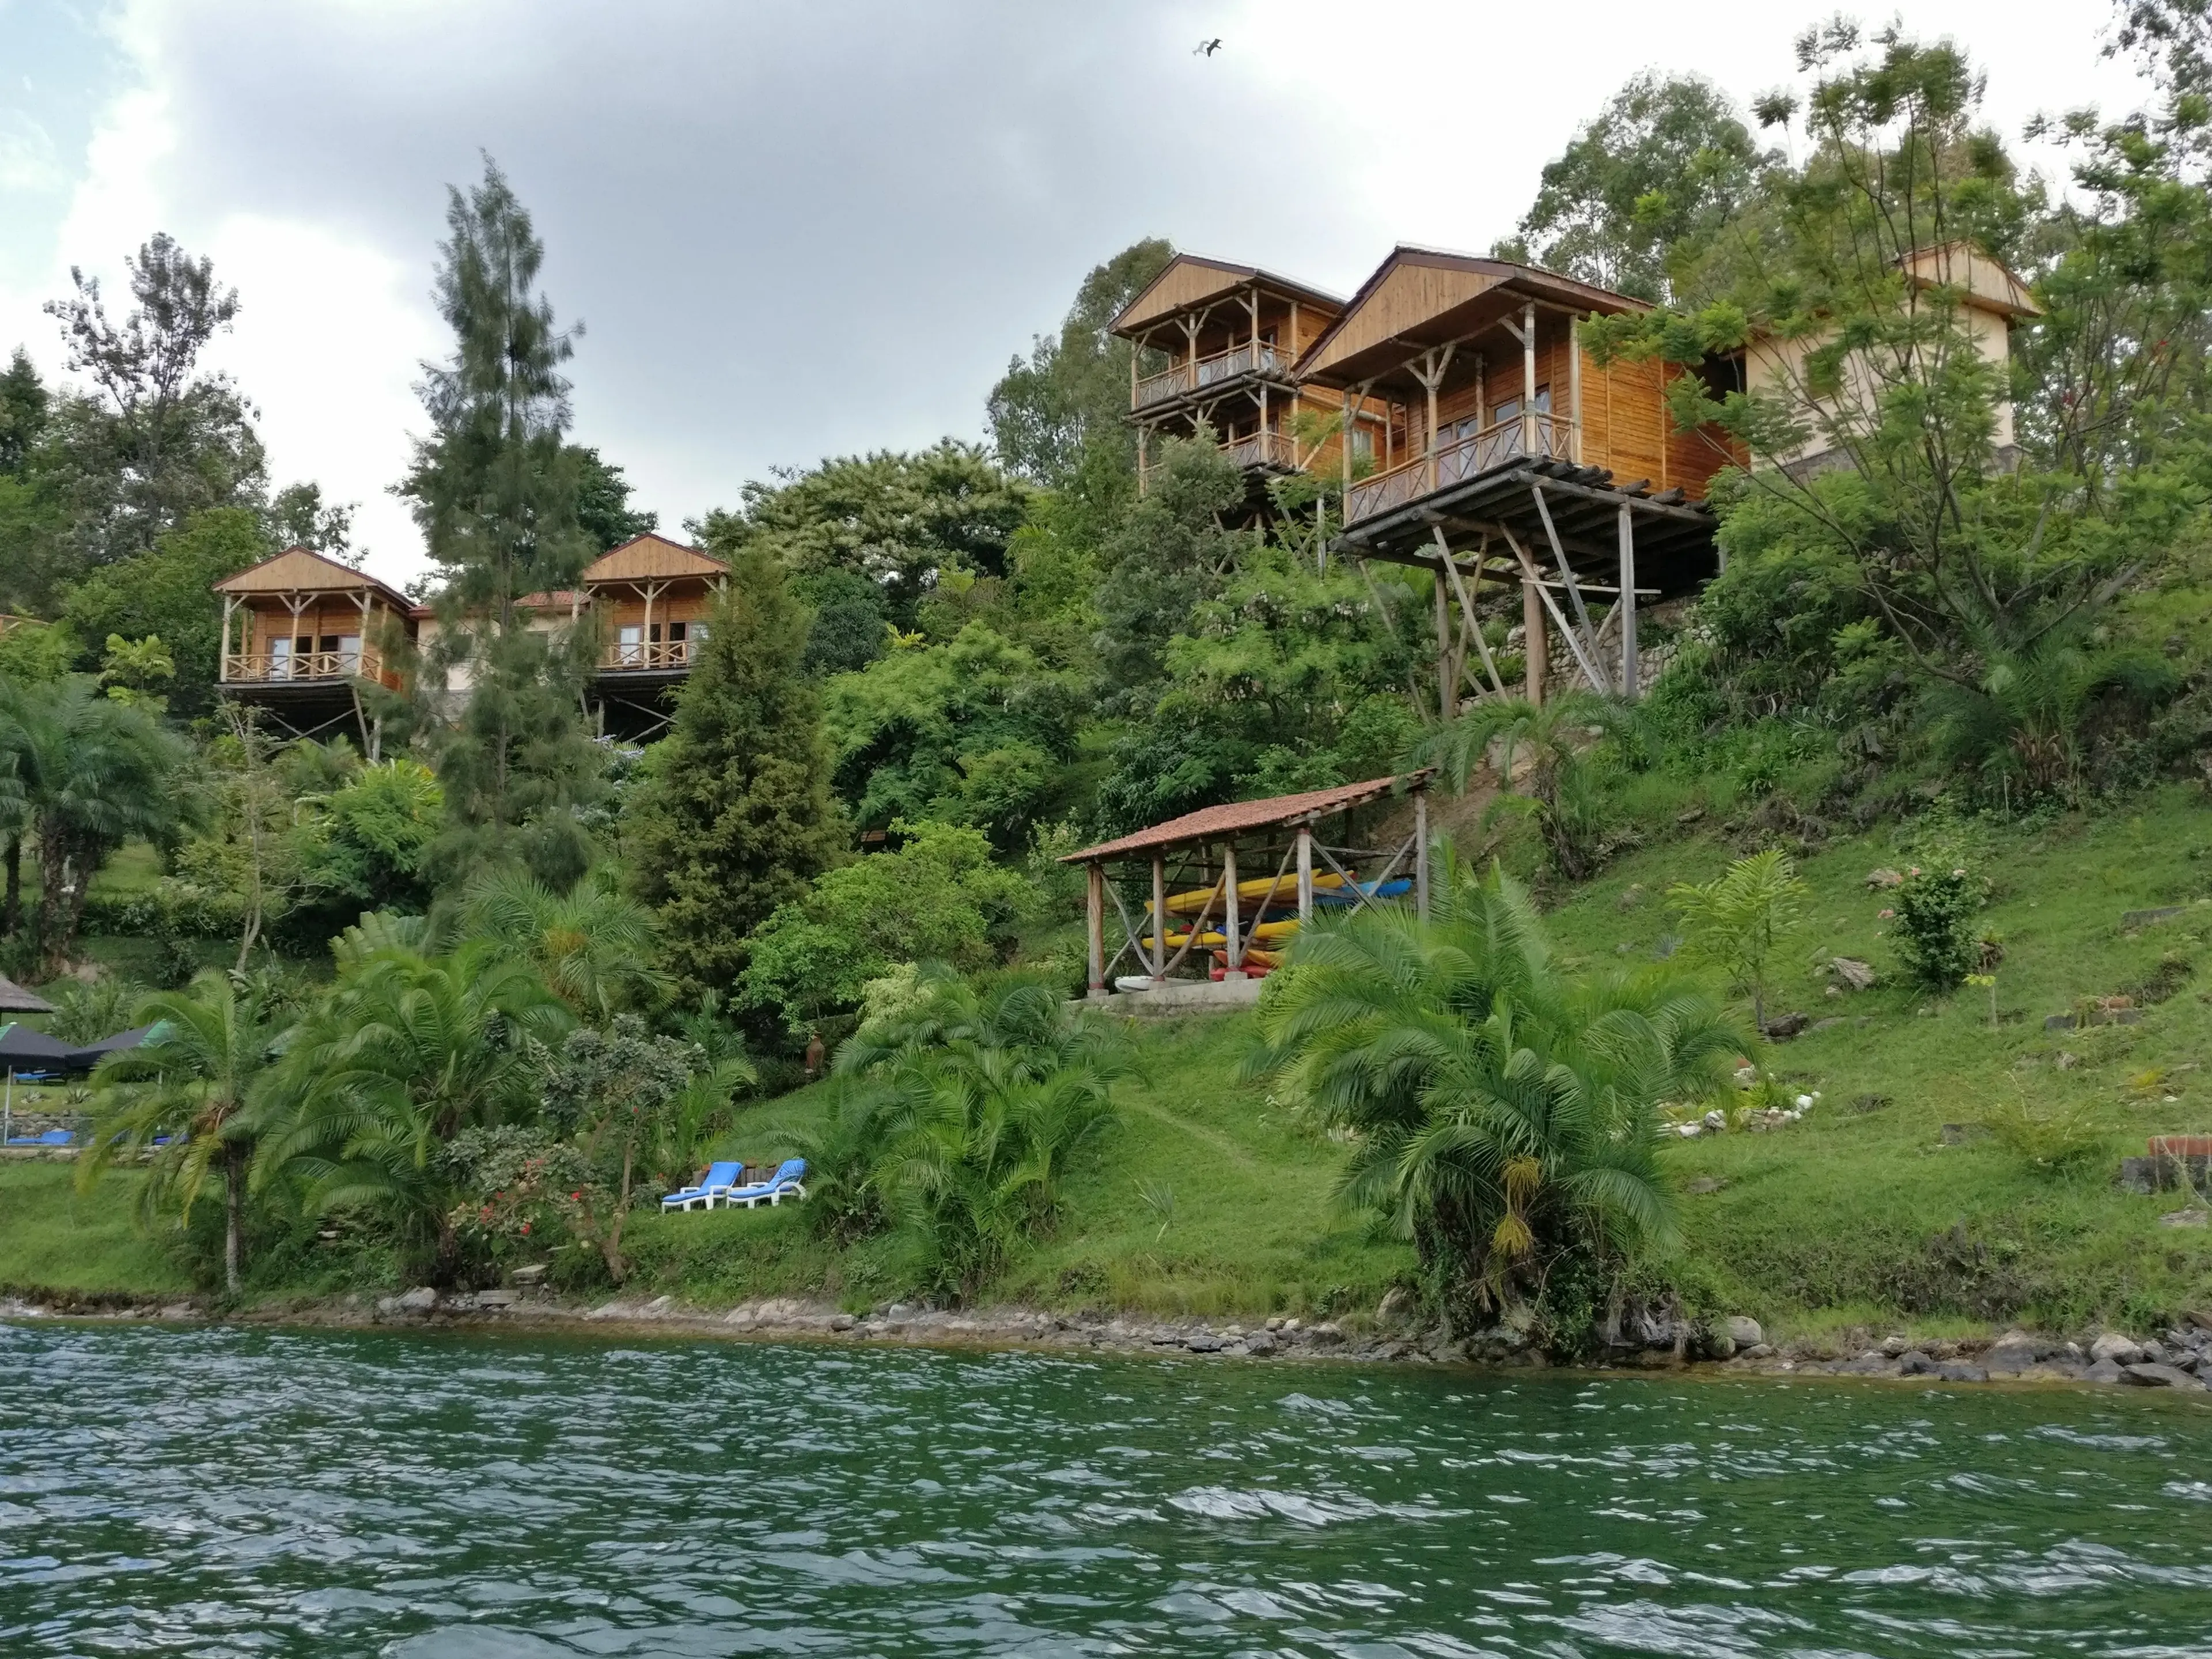 Wooden tourist lodges on the shores of lake Kivu